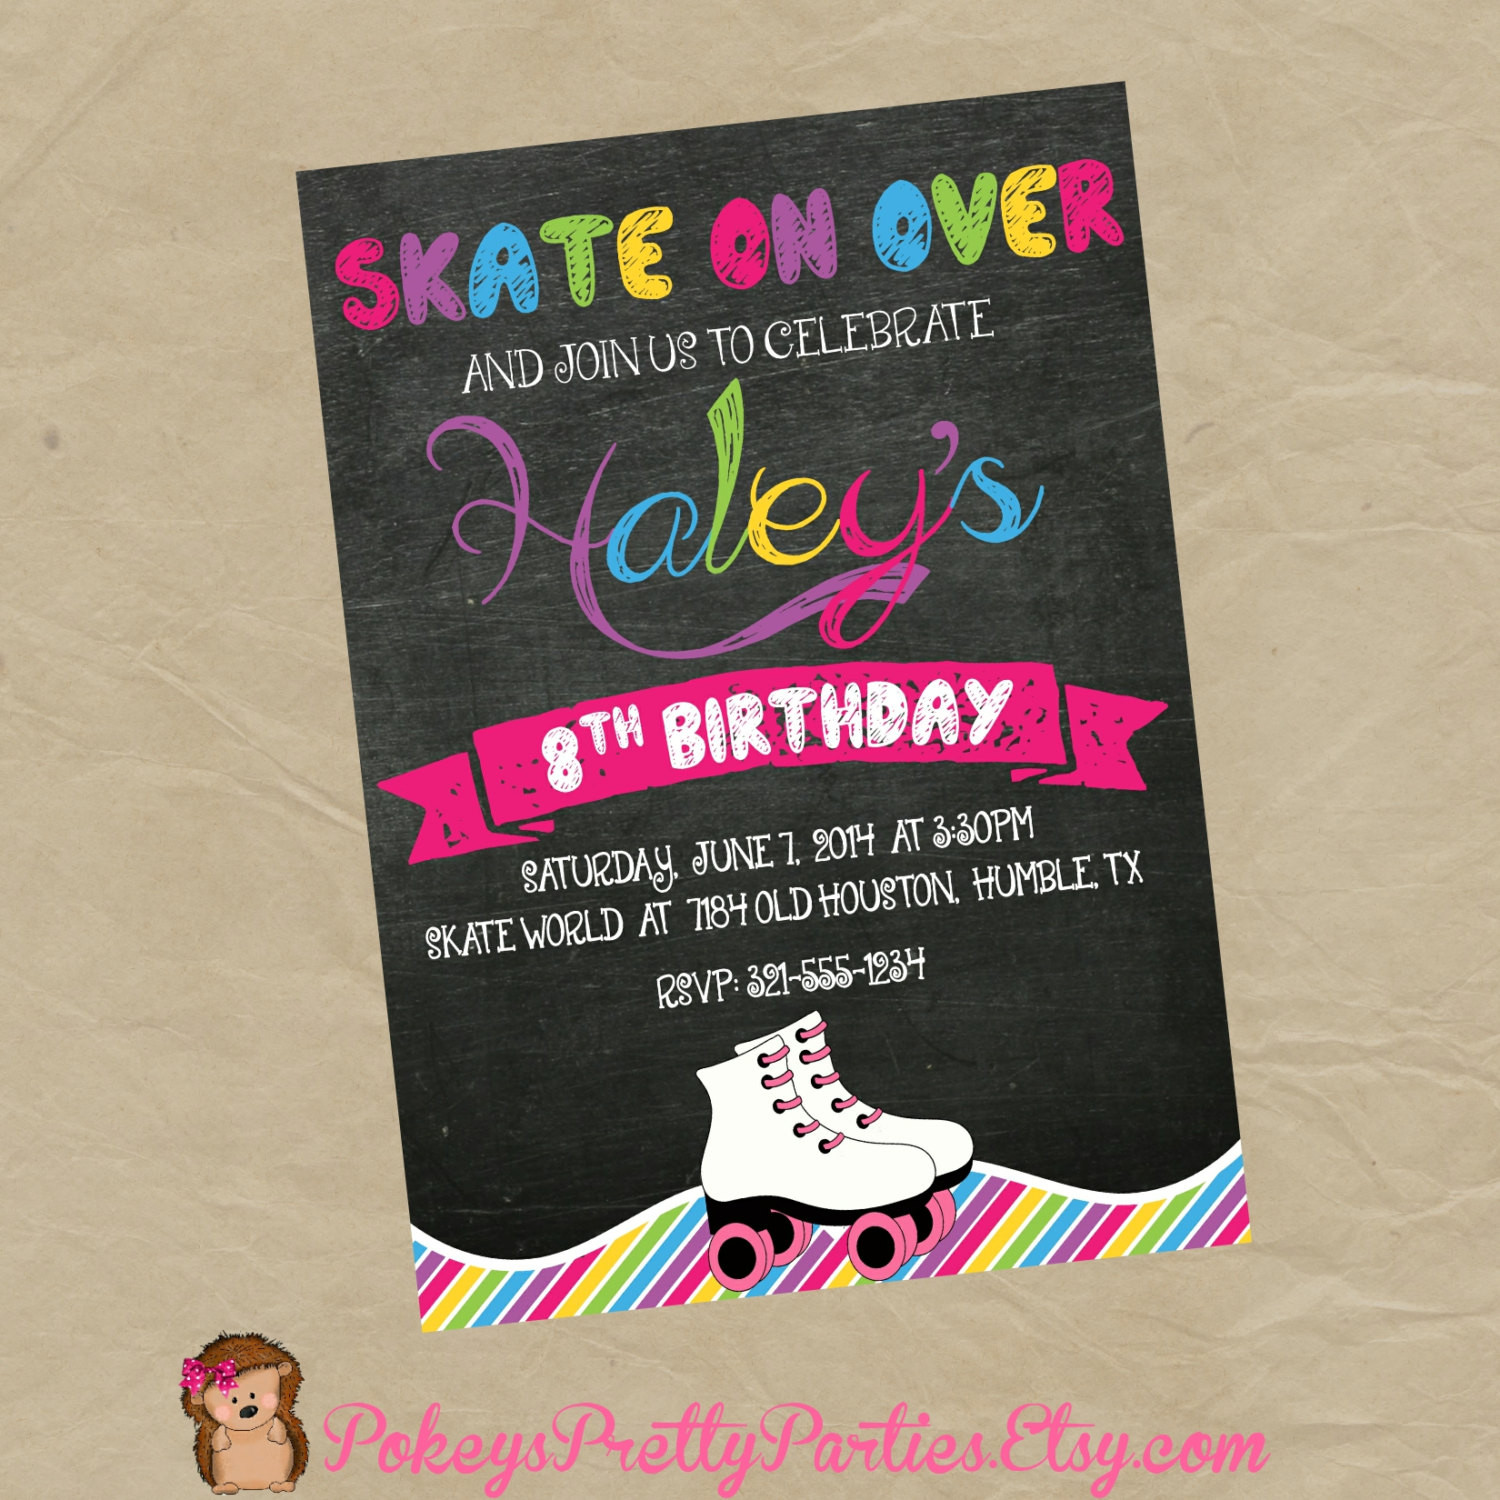 Skating Birthday Party Invitations
 Roller Skating Birthday Party Invitation Digital or Printed